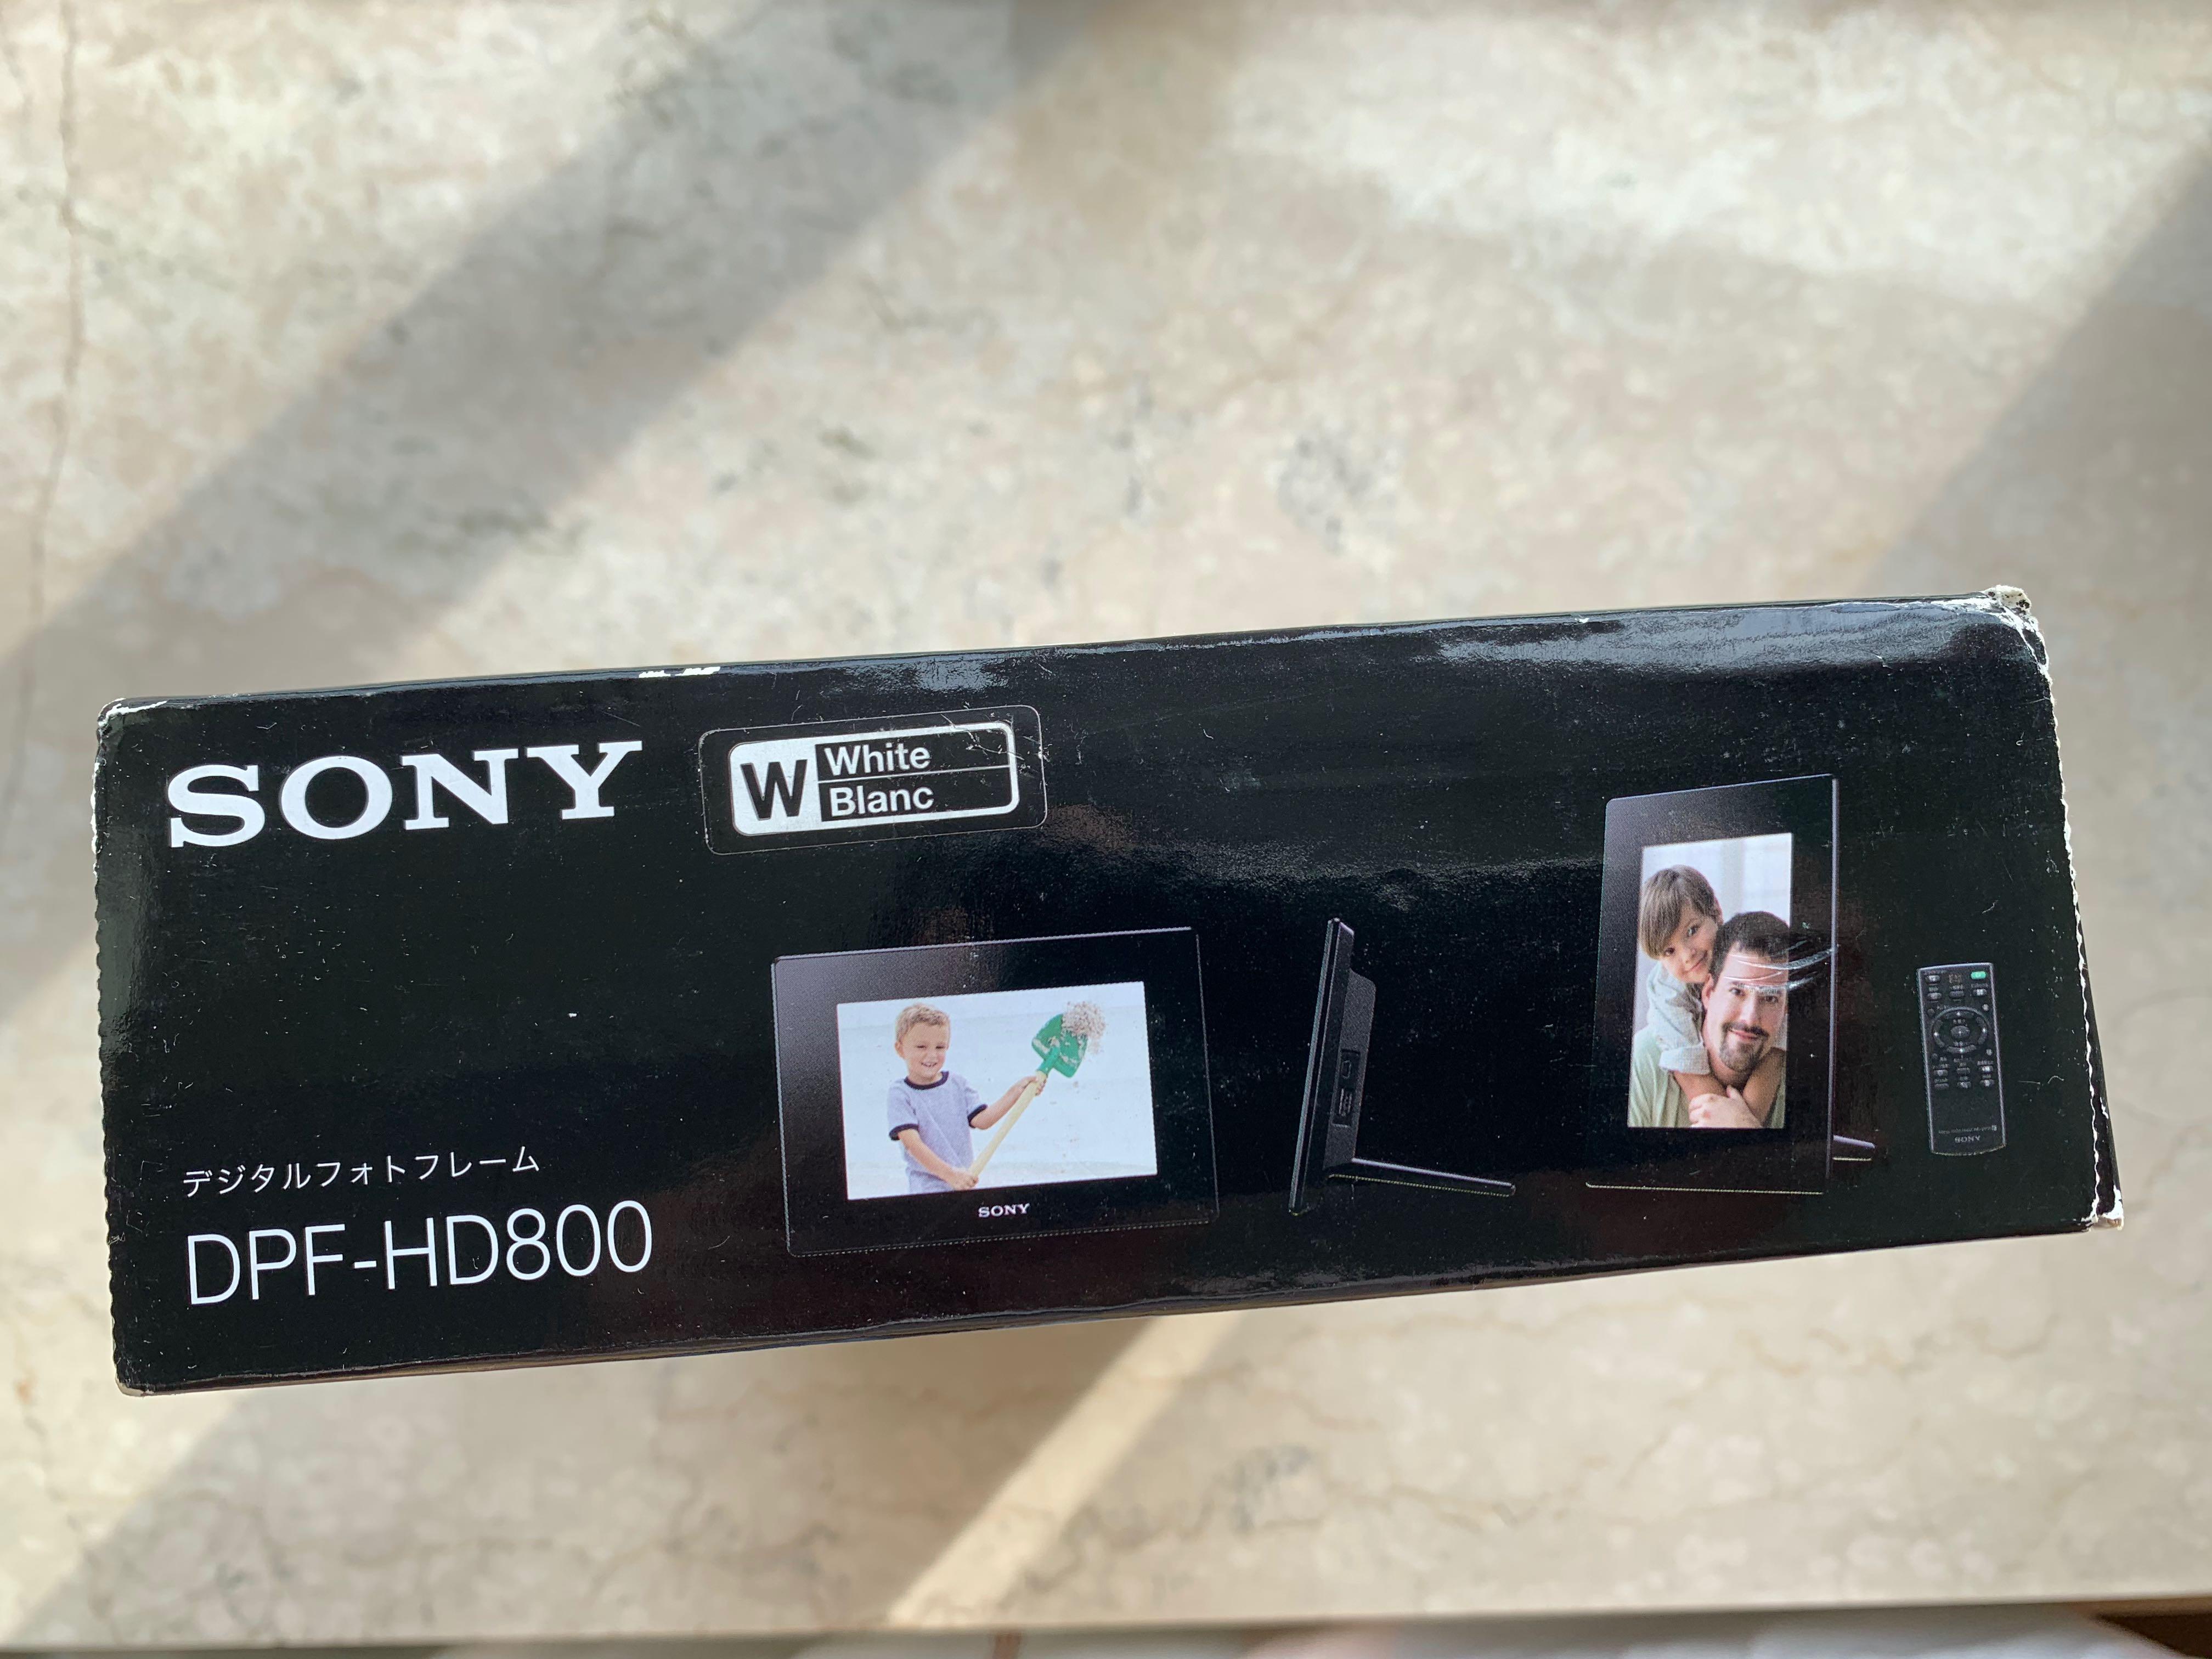 Sony S-Frame DPF-HD800 高清數碼相架, 攝影器材, 攝錄機- Carousell